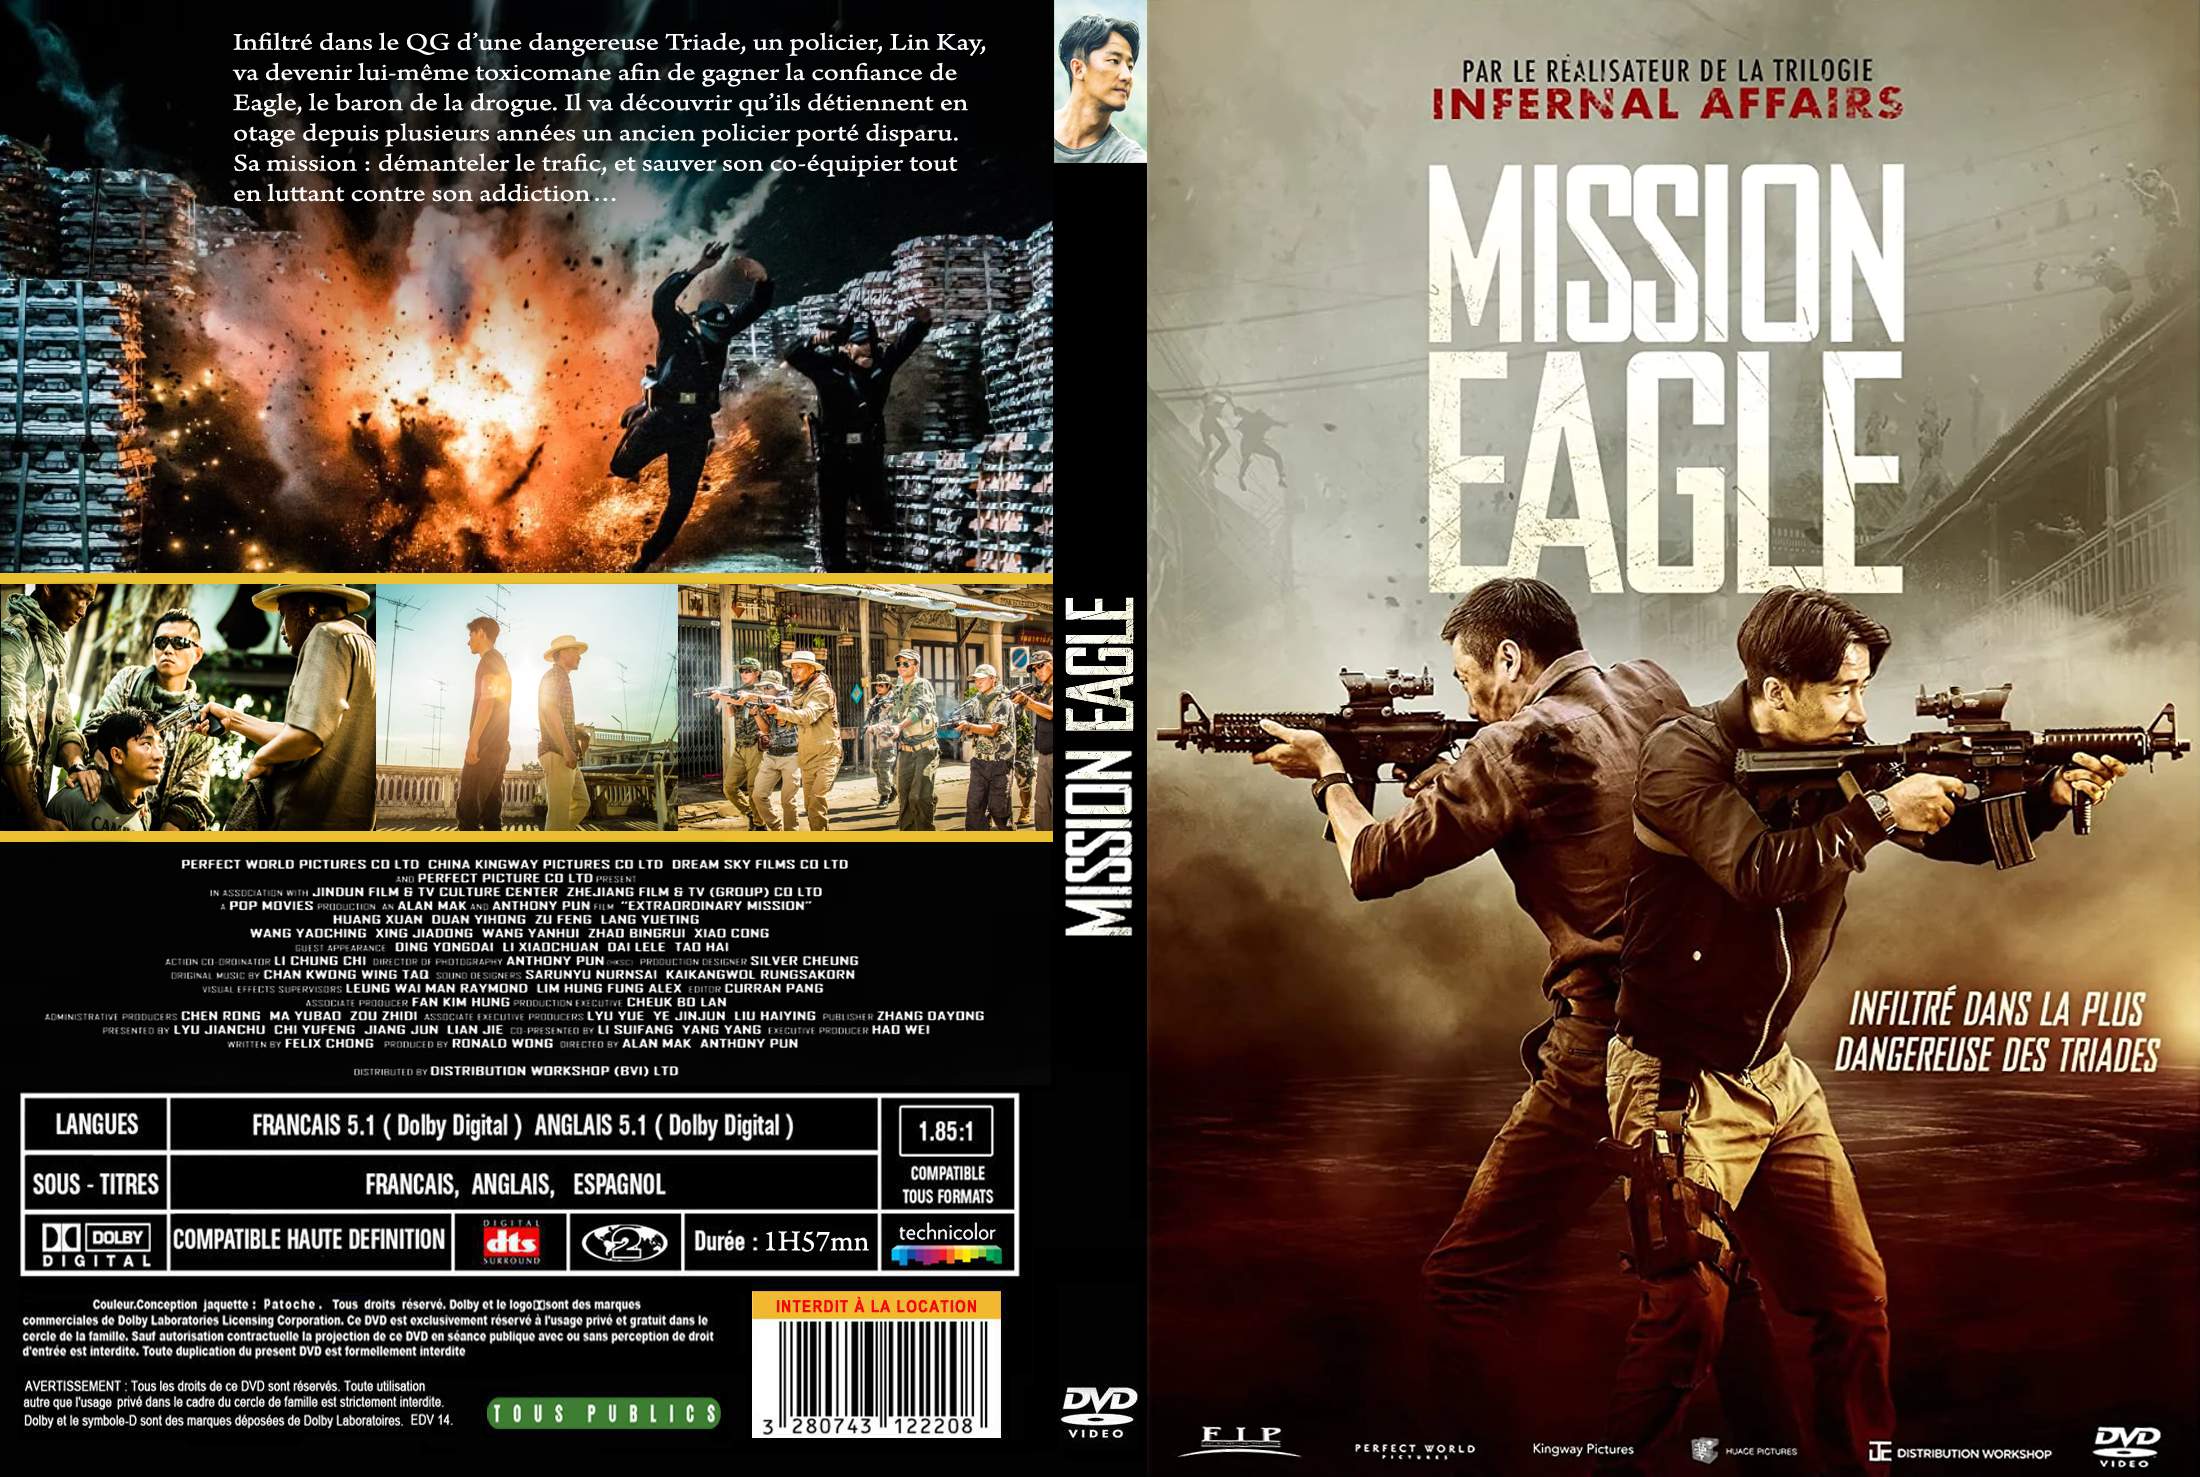 Jaquette DVD Mission Eagle custom